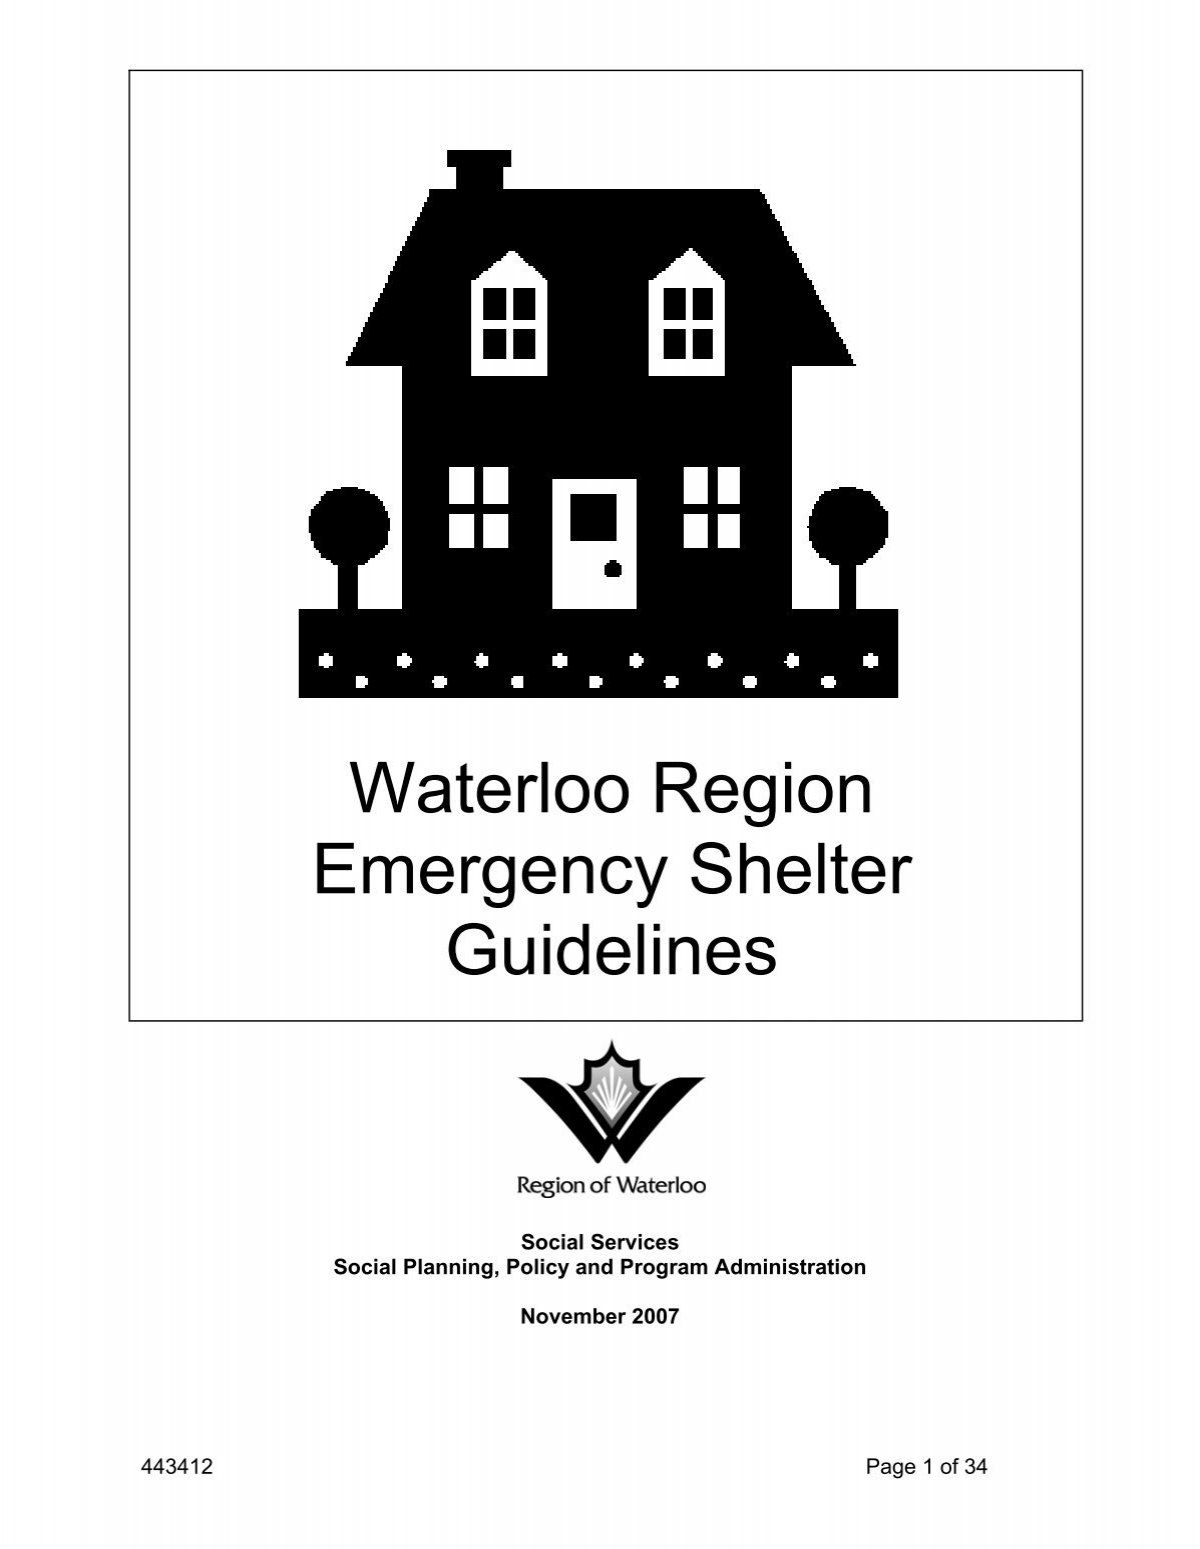 Emergency Shelter Guidelines